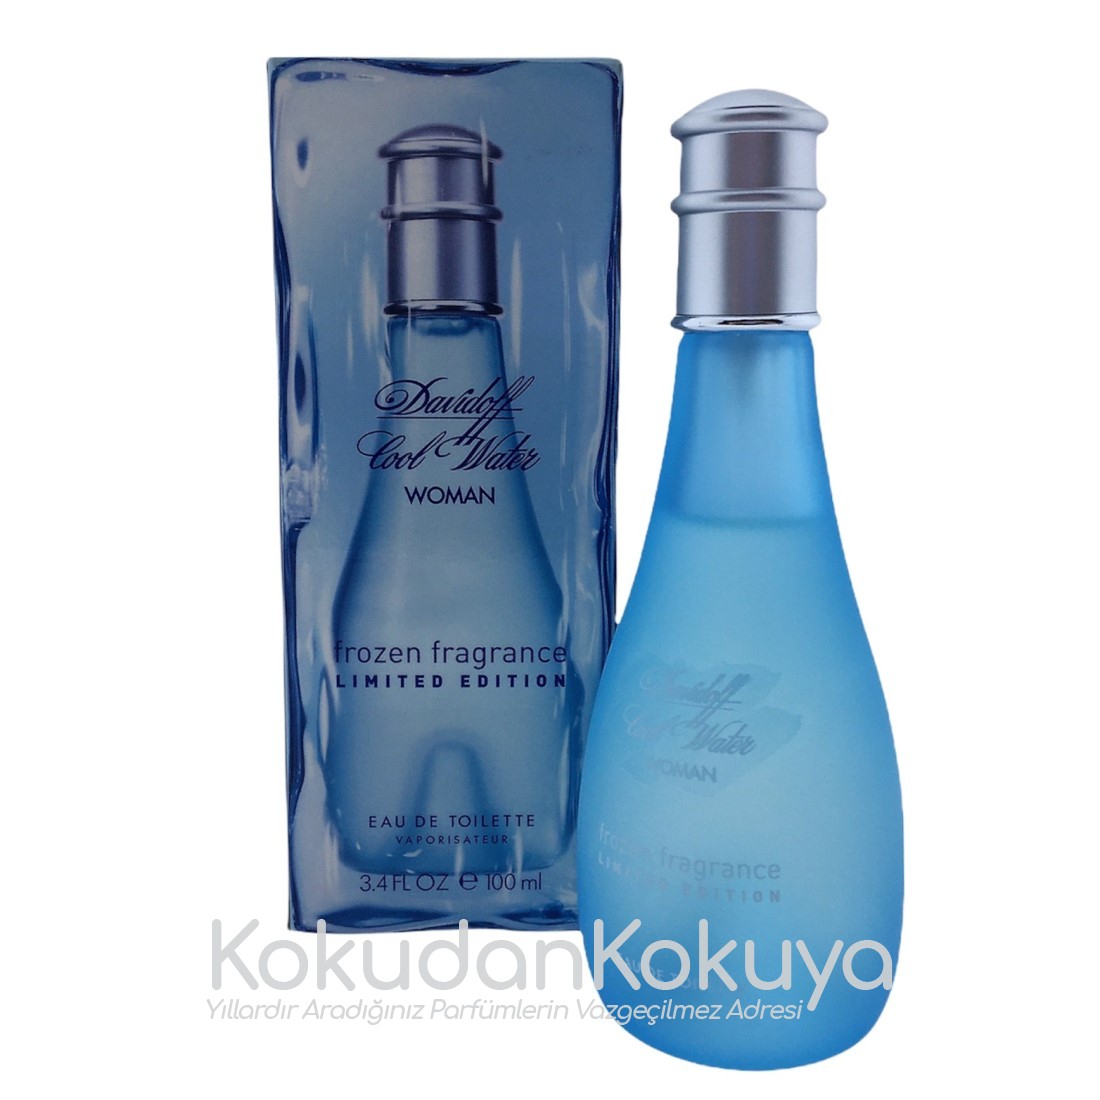 DAVIDOFF Kadın Cool Water Frozen Fragrance for Women (Vintage)